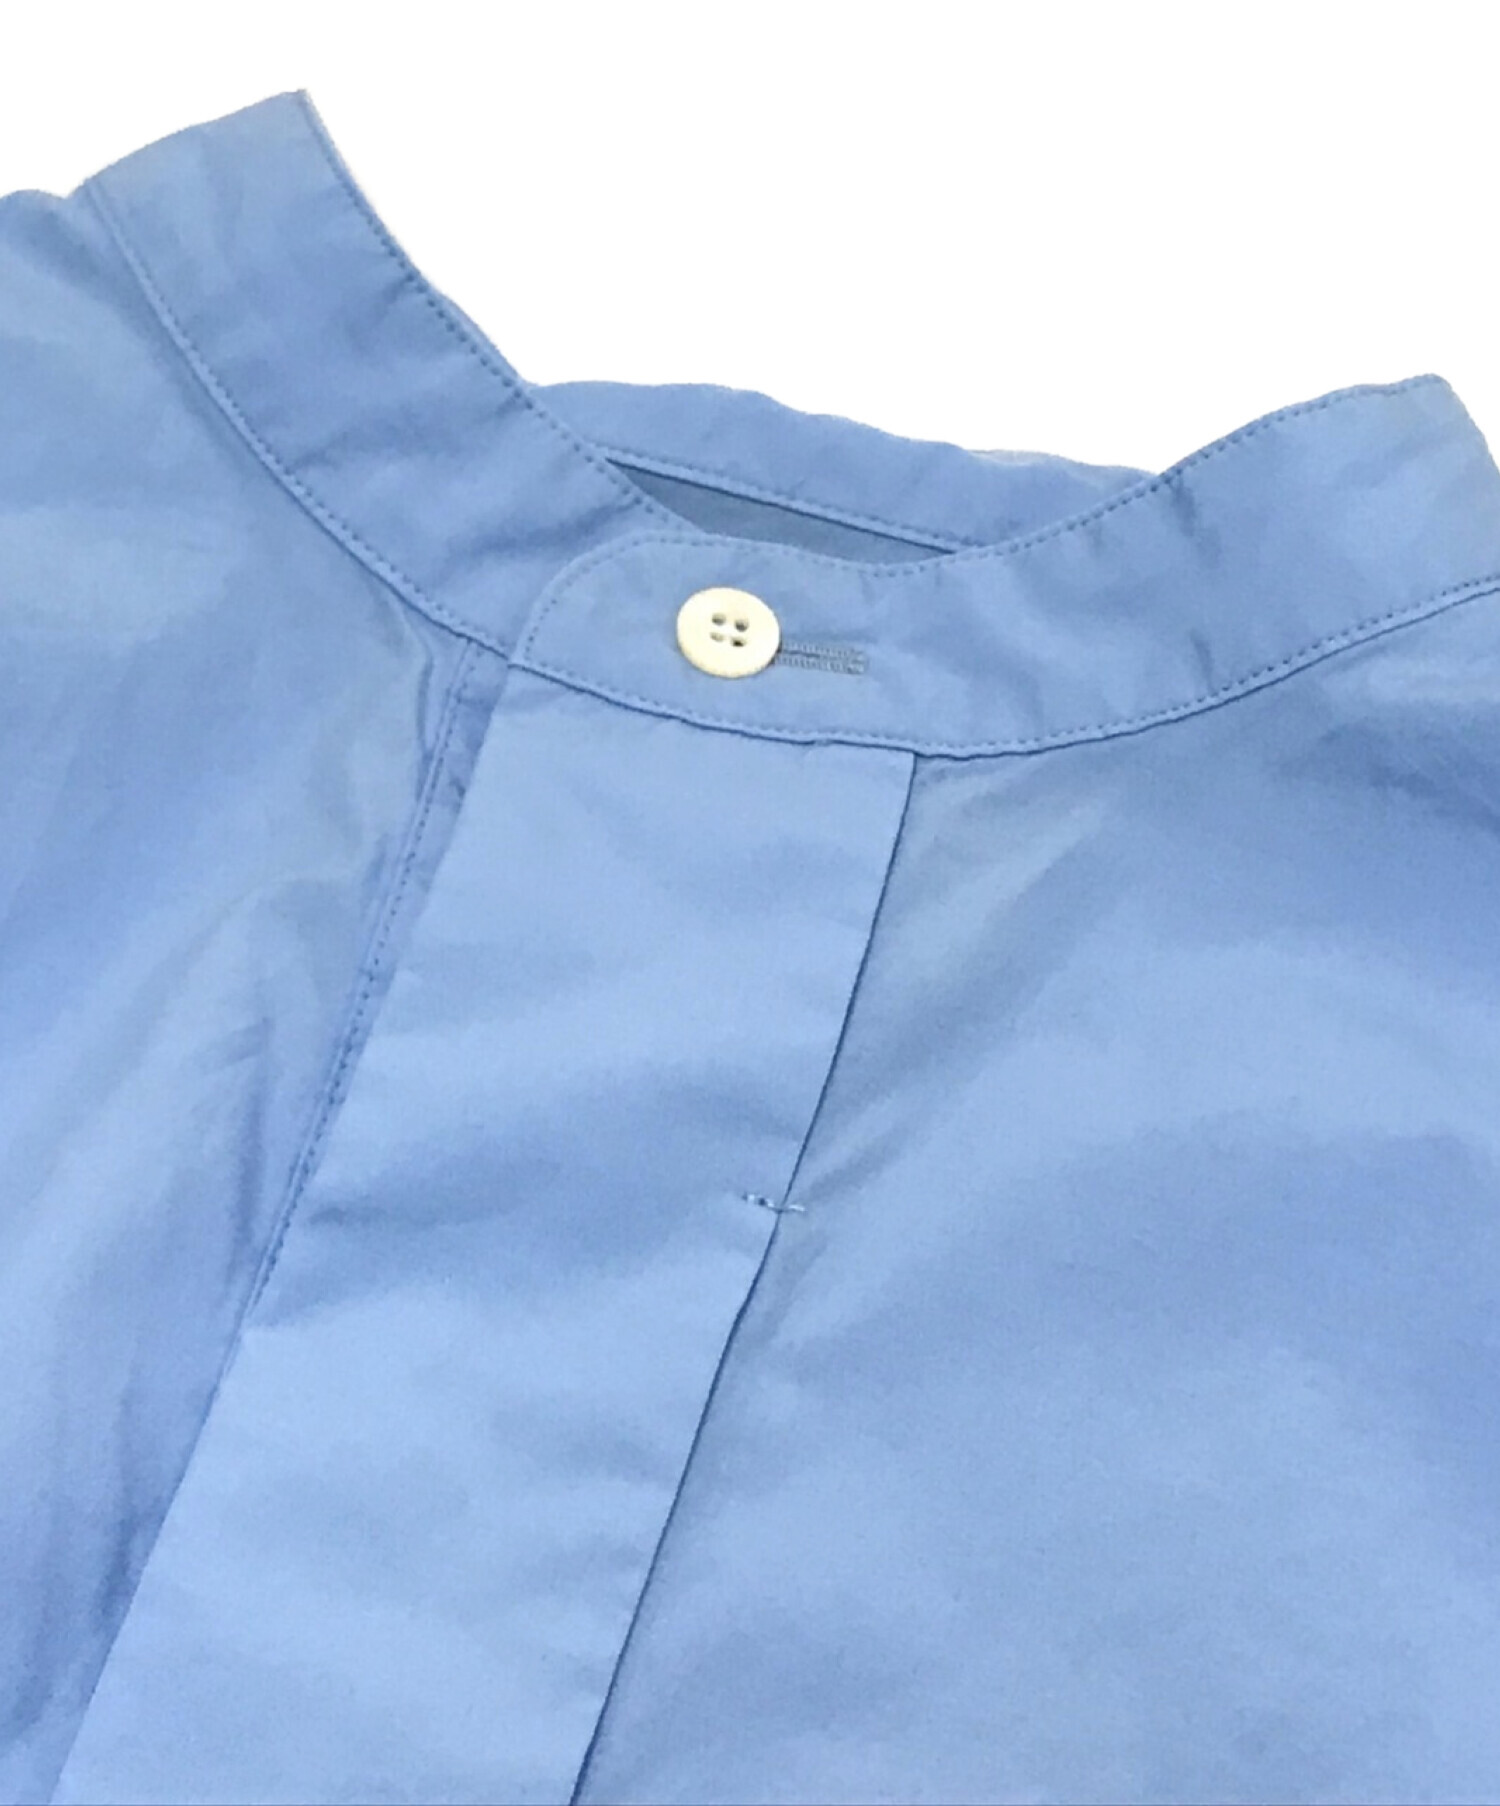 Traditional Weatherwear (トラディショナルウェザーウェア) コットンフライフロントショートスリーブシャツプルオーバー ブルー  サイズ:S